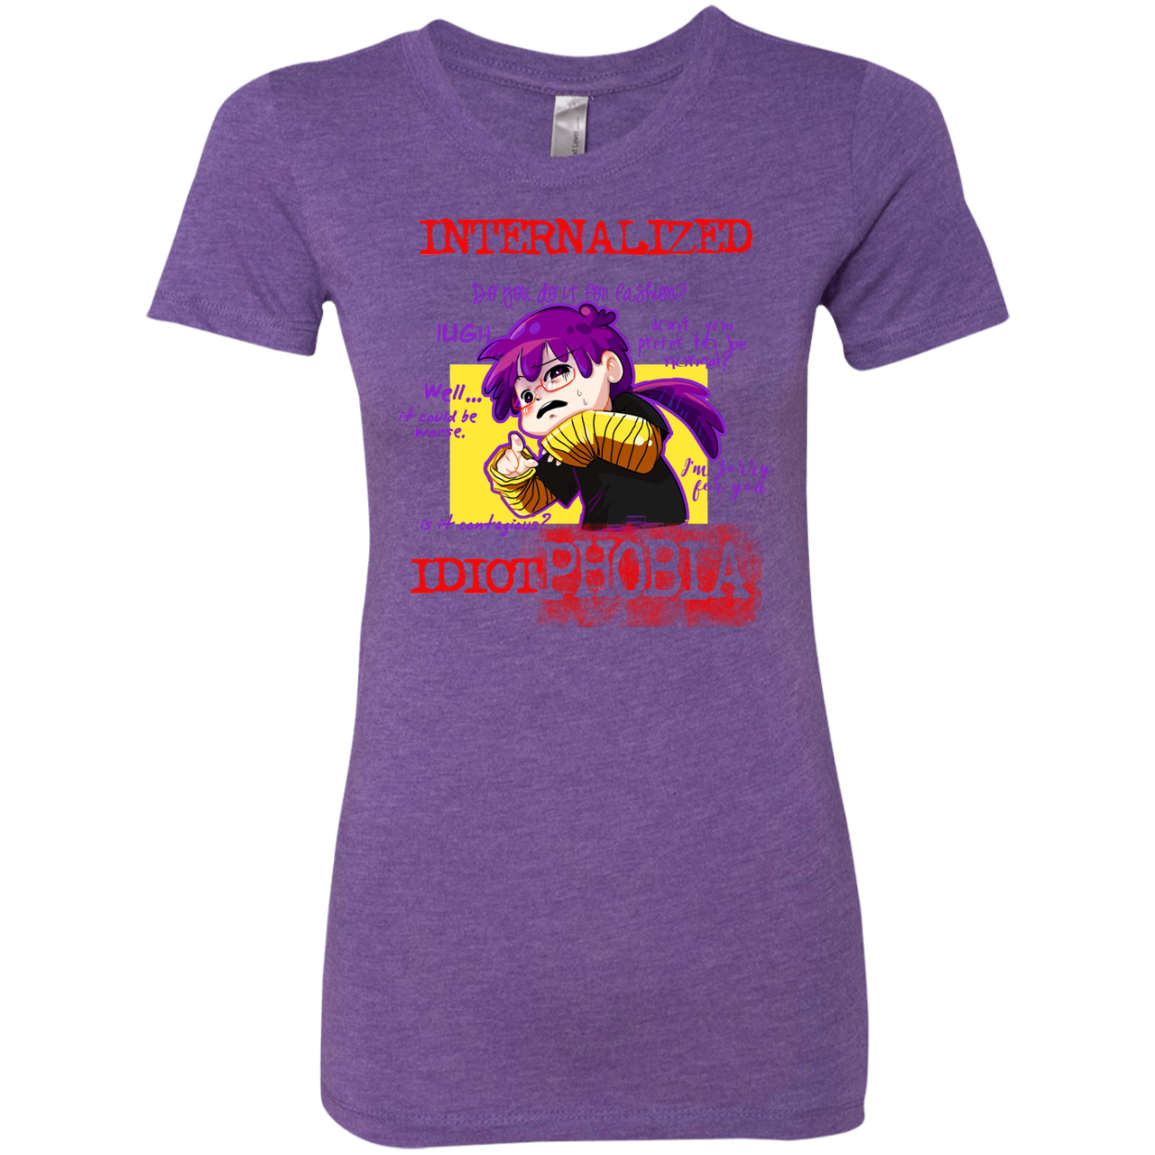 Idiot phobia Women's Triblend T-Shirt